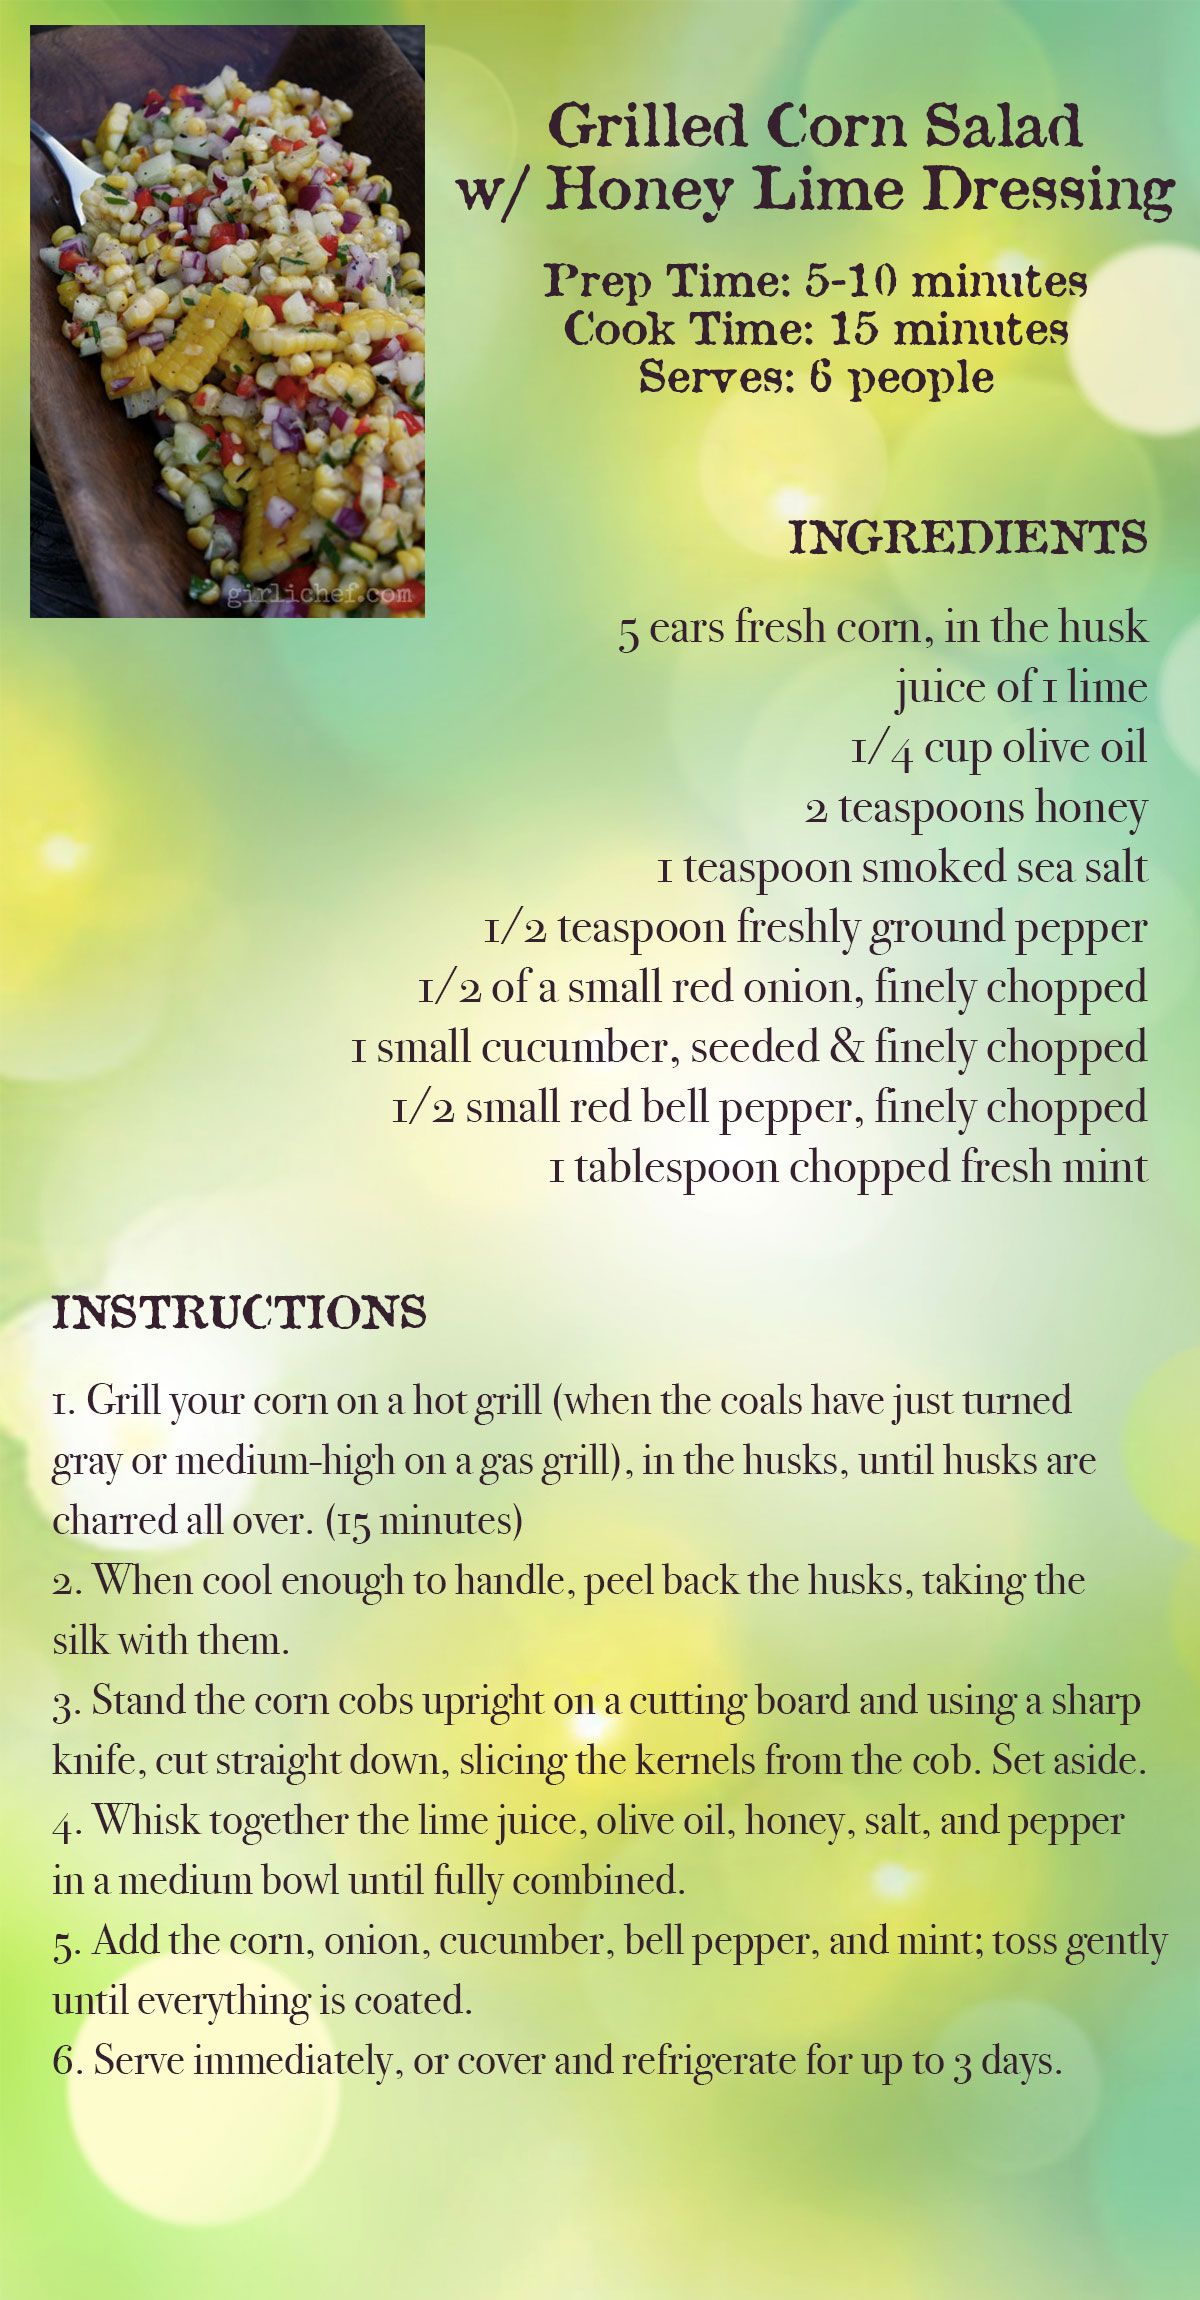 Grilled Corn Salad Recipe Card